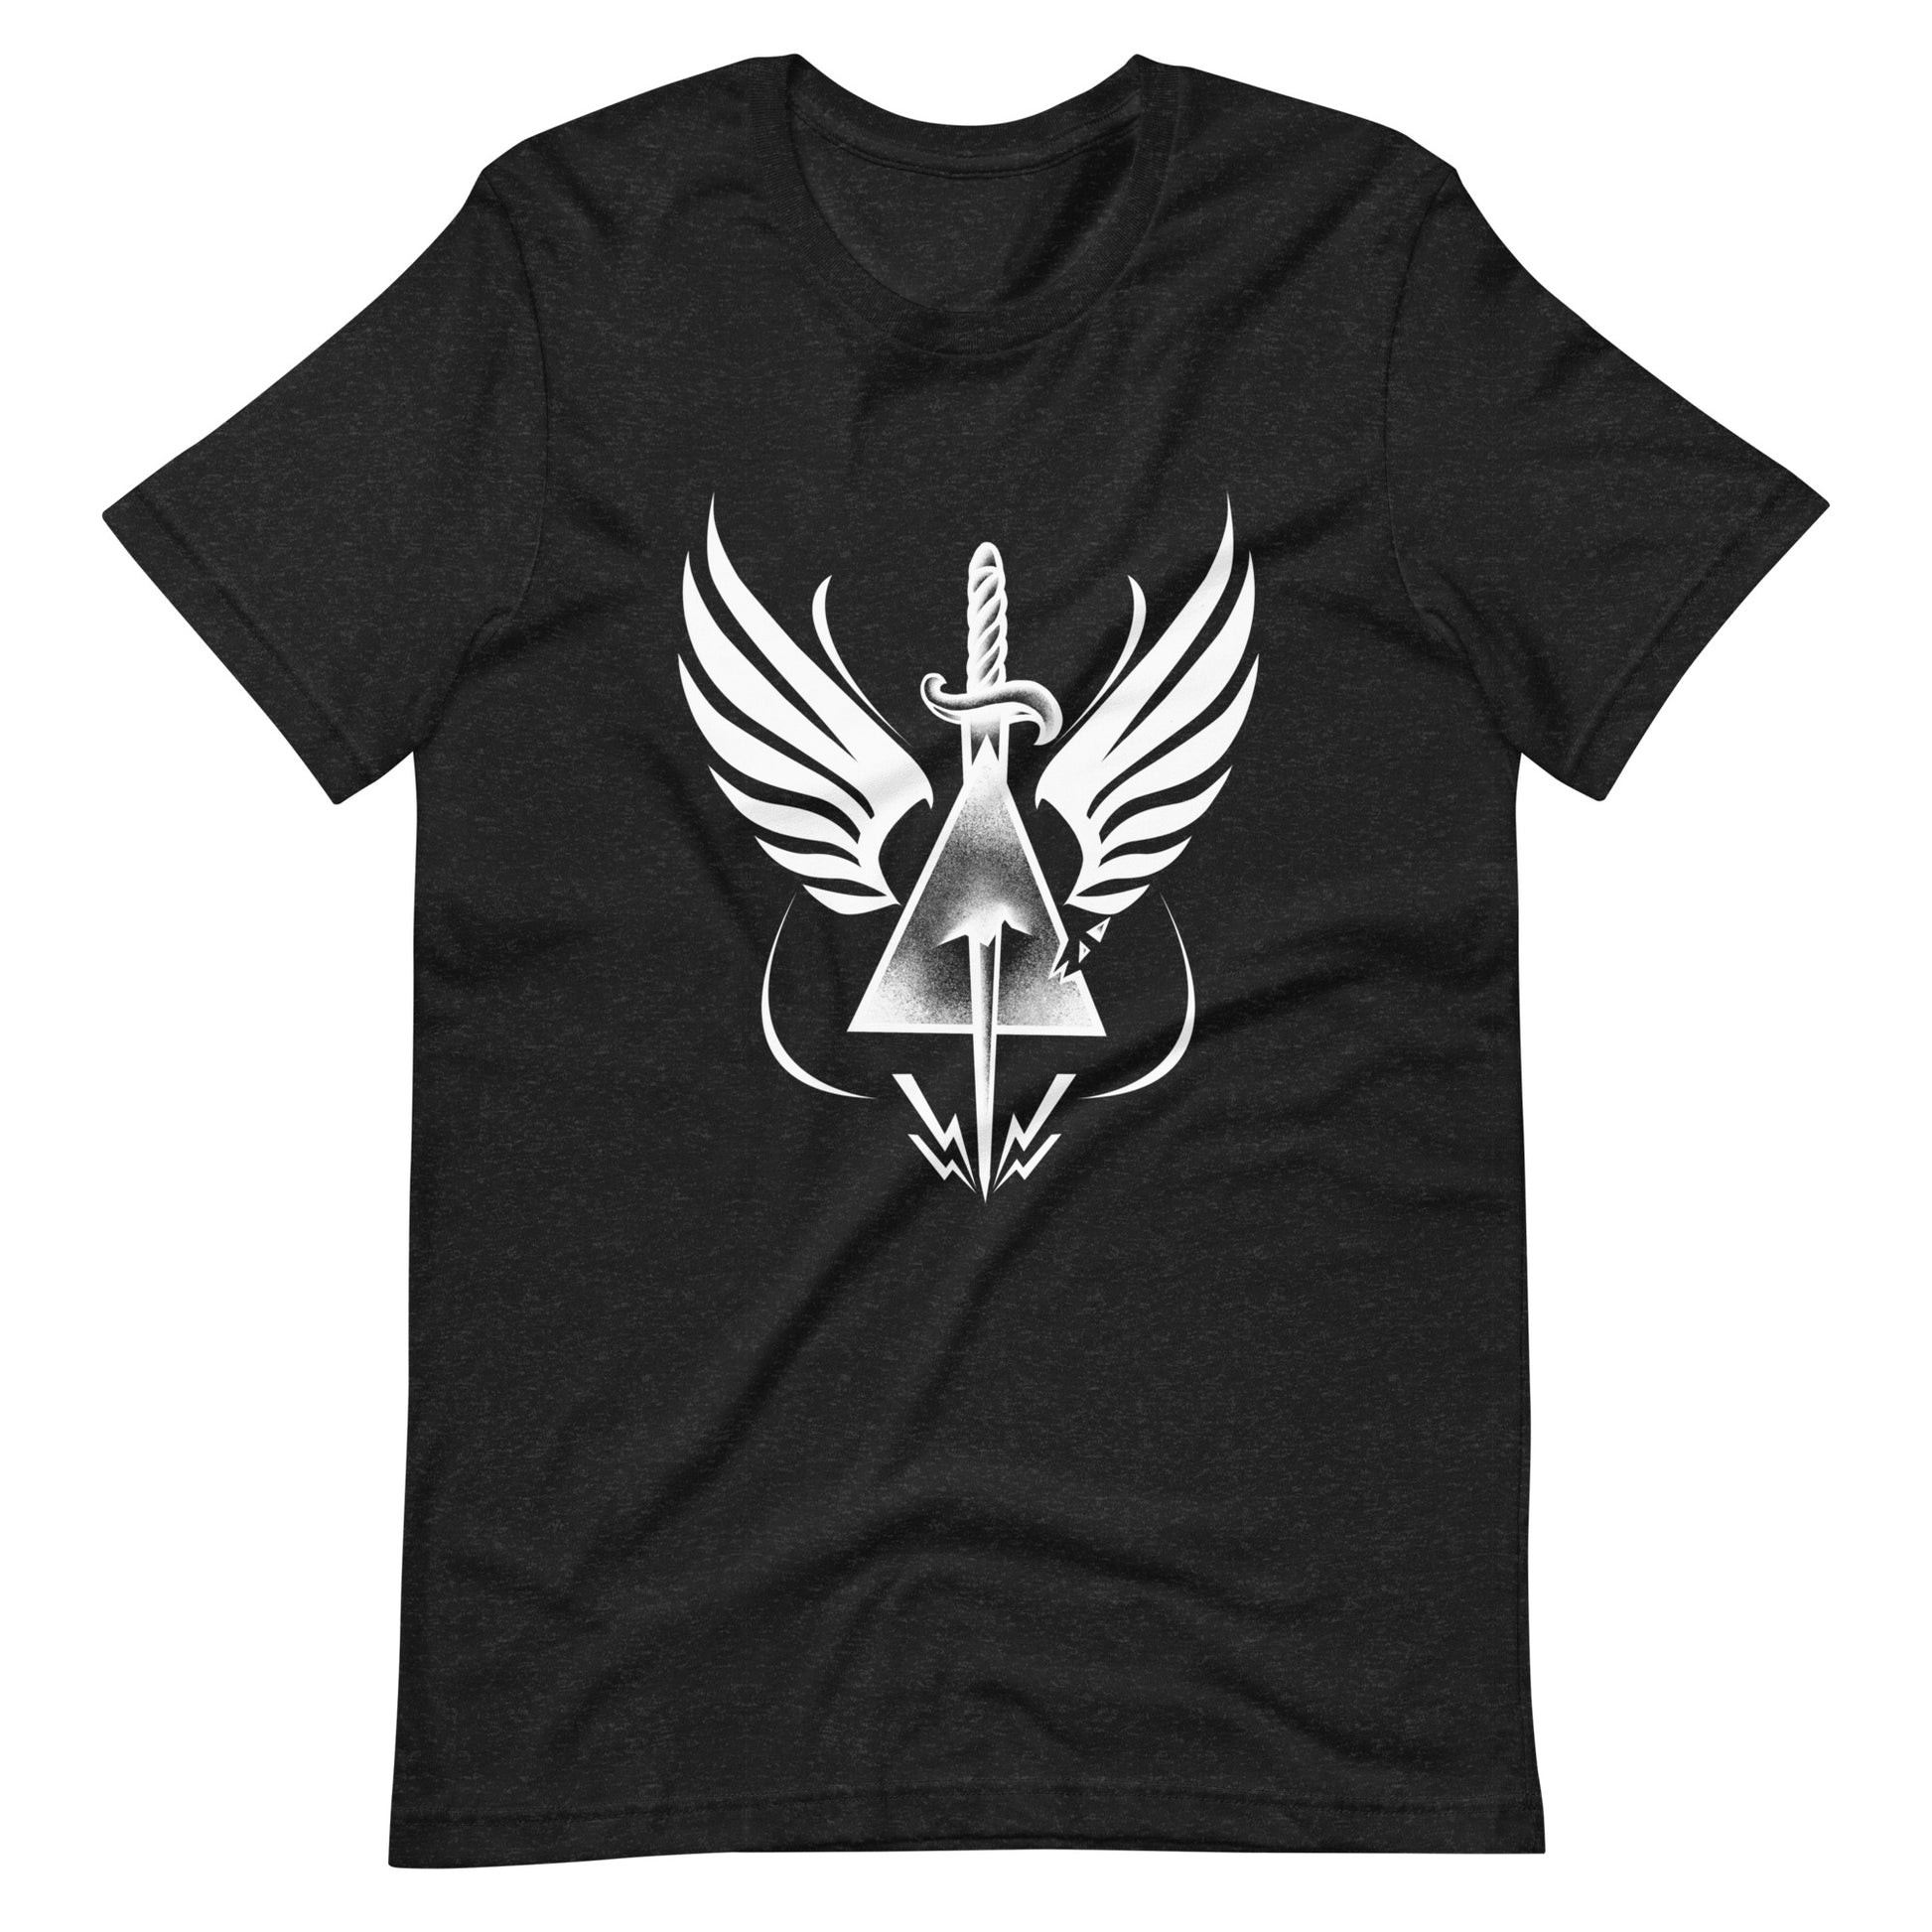 Dead Triangle - Men's t-shirt - Black Heather Front